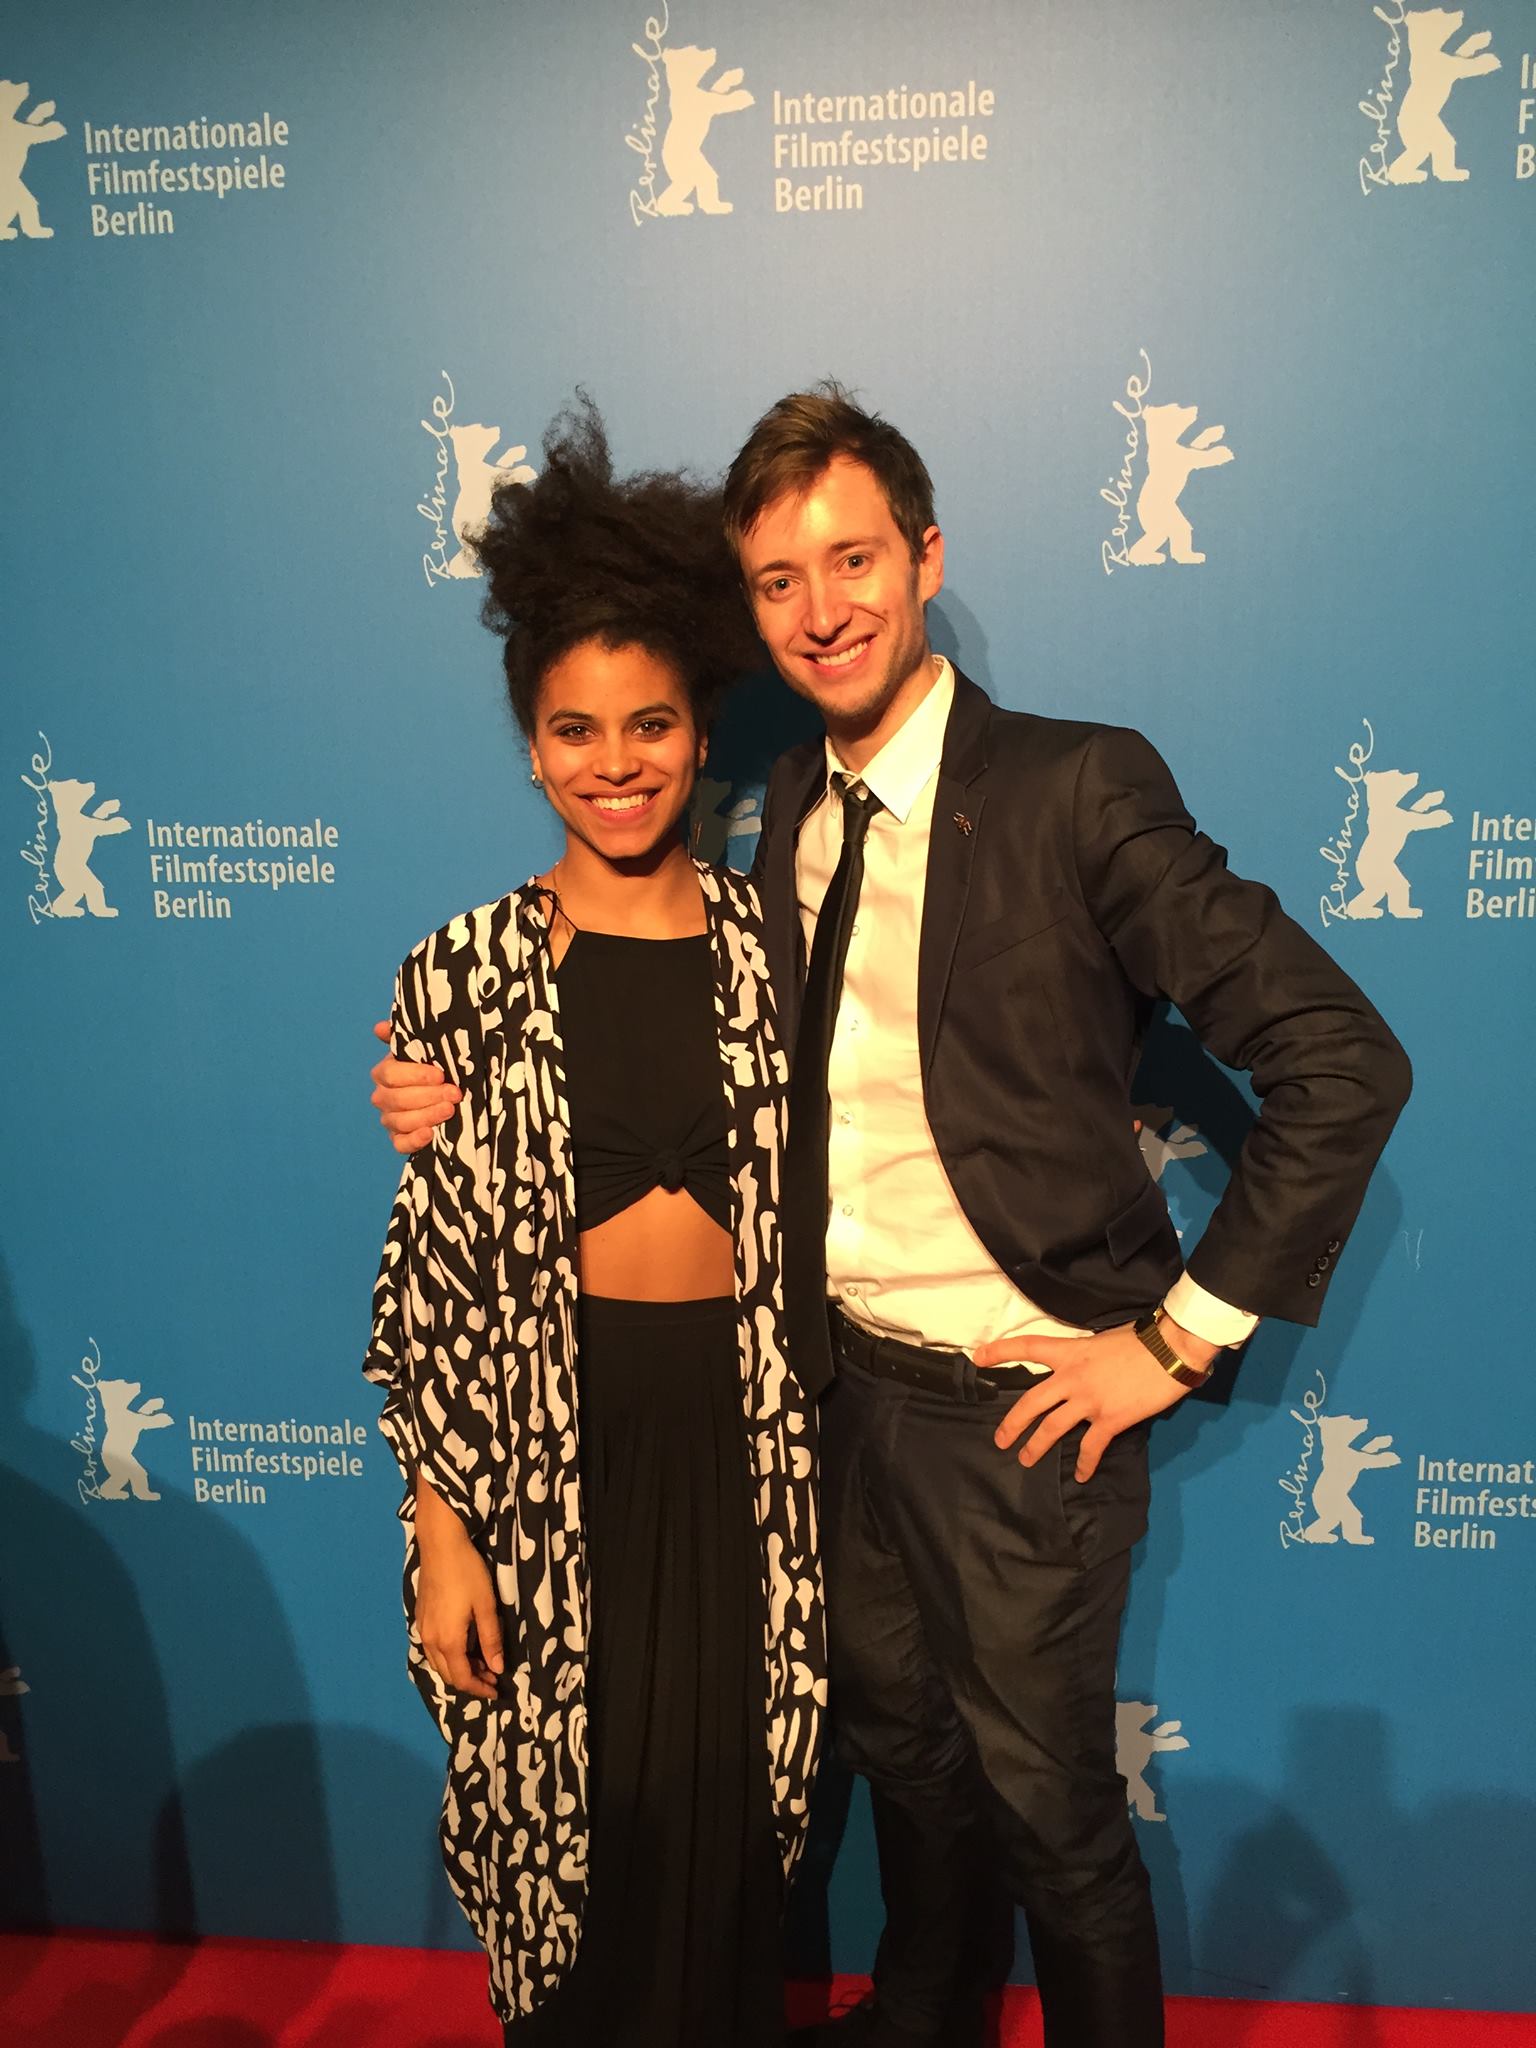 Zazie Beetz and David Rysdahl at the Berlinale Film Festival